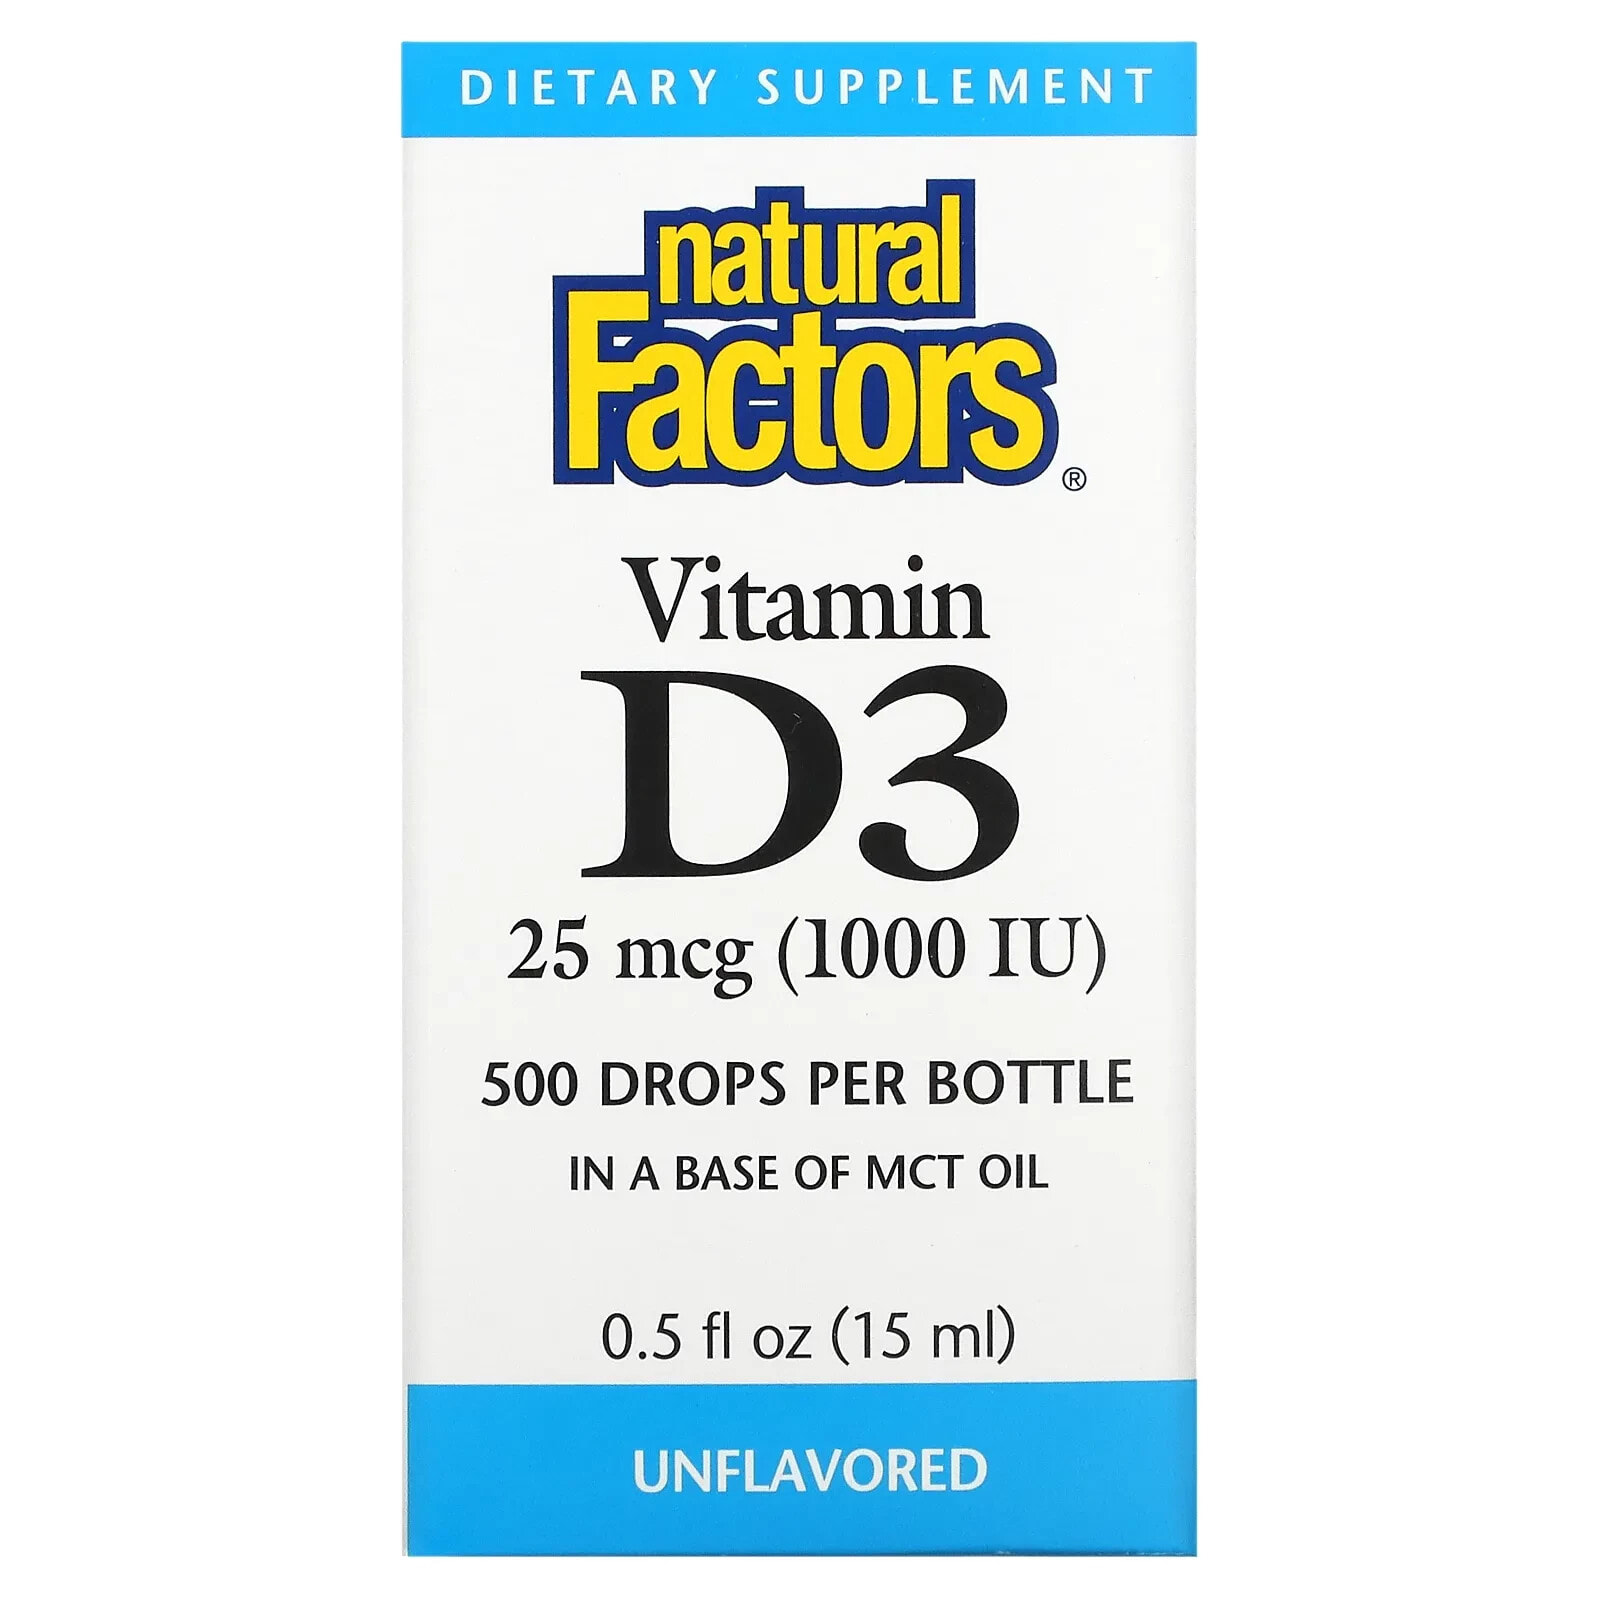 Vitamin D3 Drops, Unflavored, 25 mcg (1,000 IU), 0.5 fl oz (15 ml)